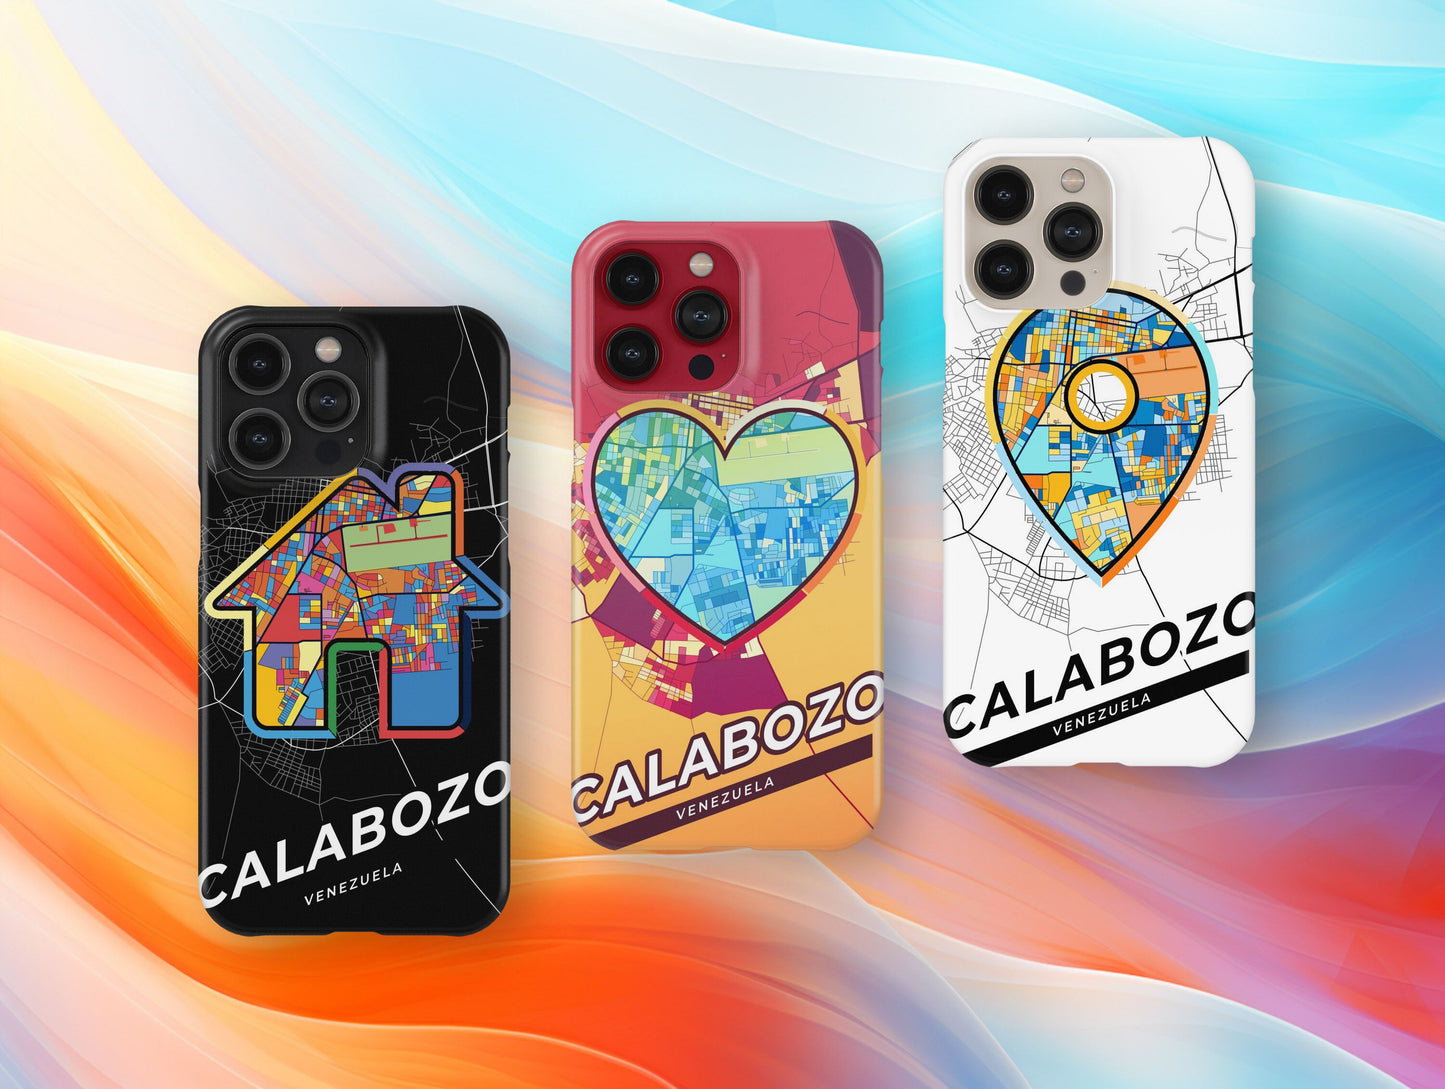 Calabozo Venezuela slim phone case with colorful icon. Birthday, wedding or housewarming gift. Couple match cases.